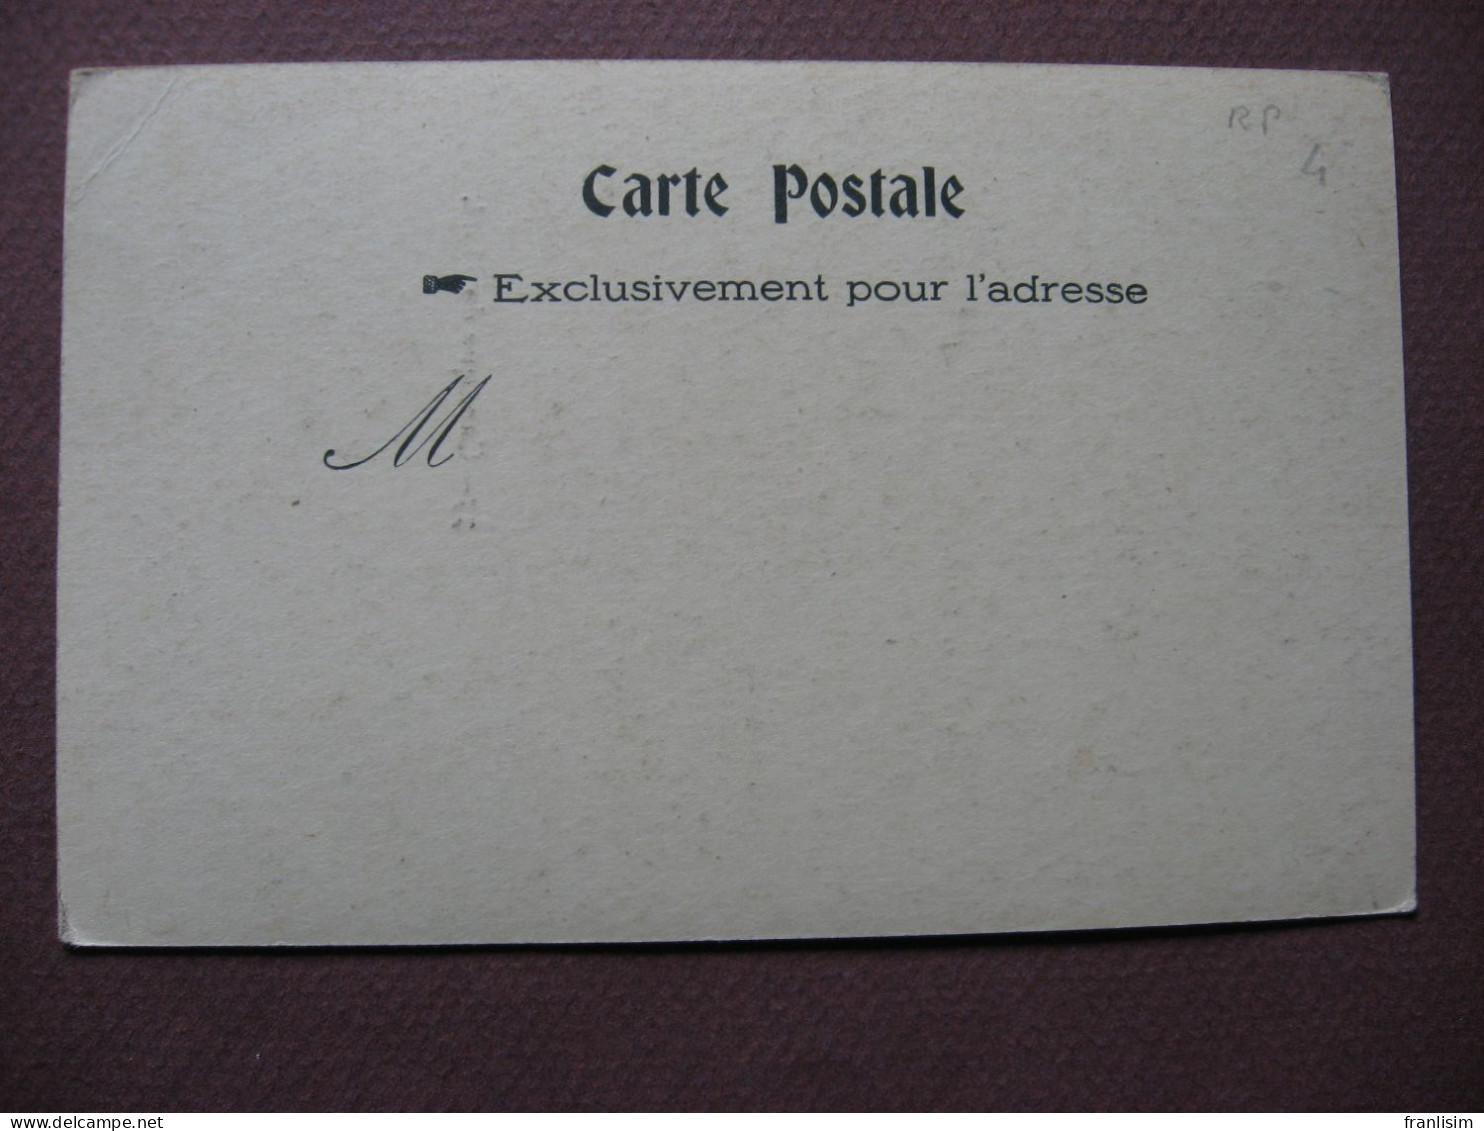 CPA FRANCE NOUVELLE CALEDONIE ETHNIQUE ETHNIE Kanak Canaque De Maré RARE ? CARTE PRECURSEUR ( Avant 1905 ) - Nueva Caledonia